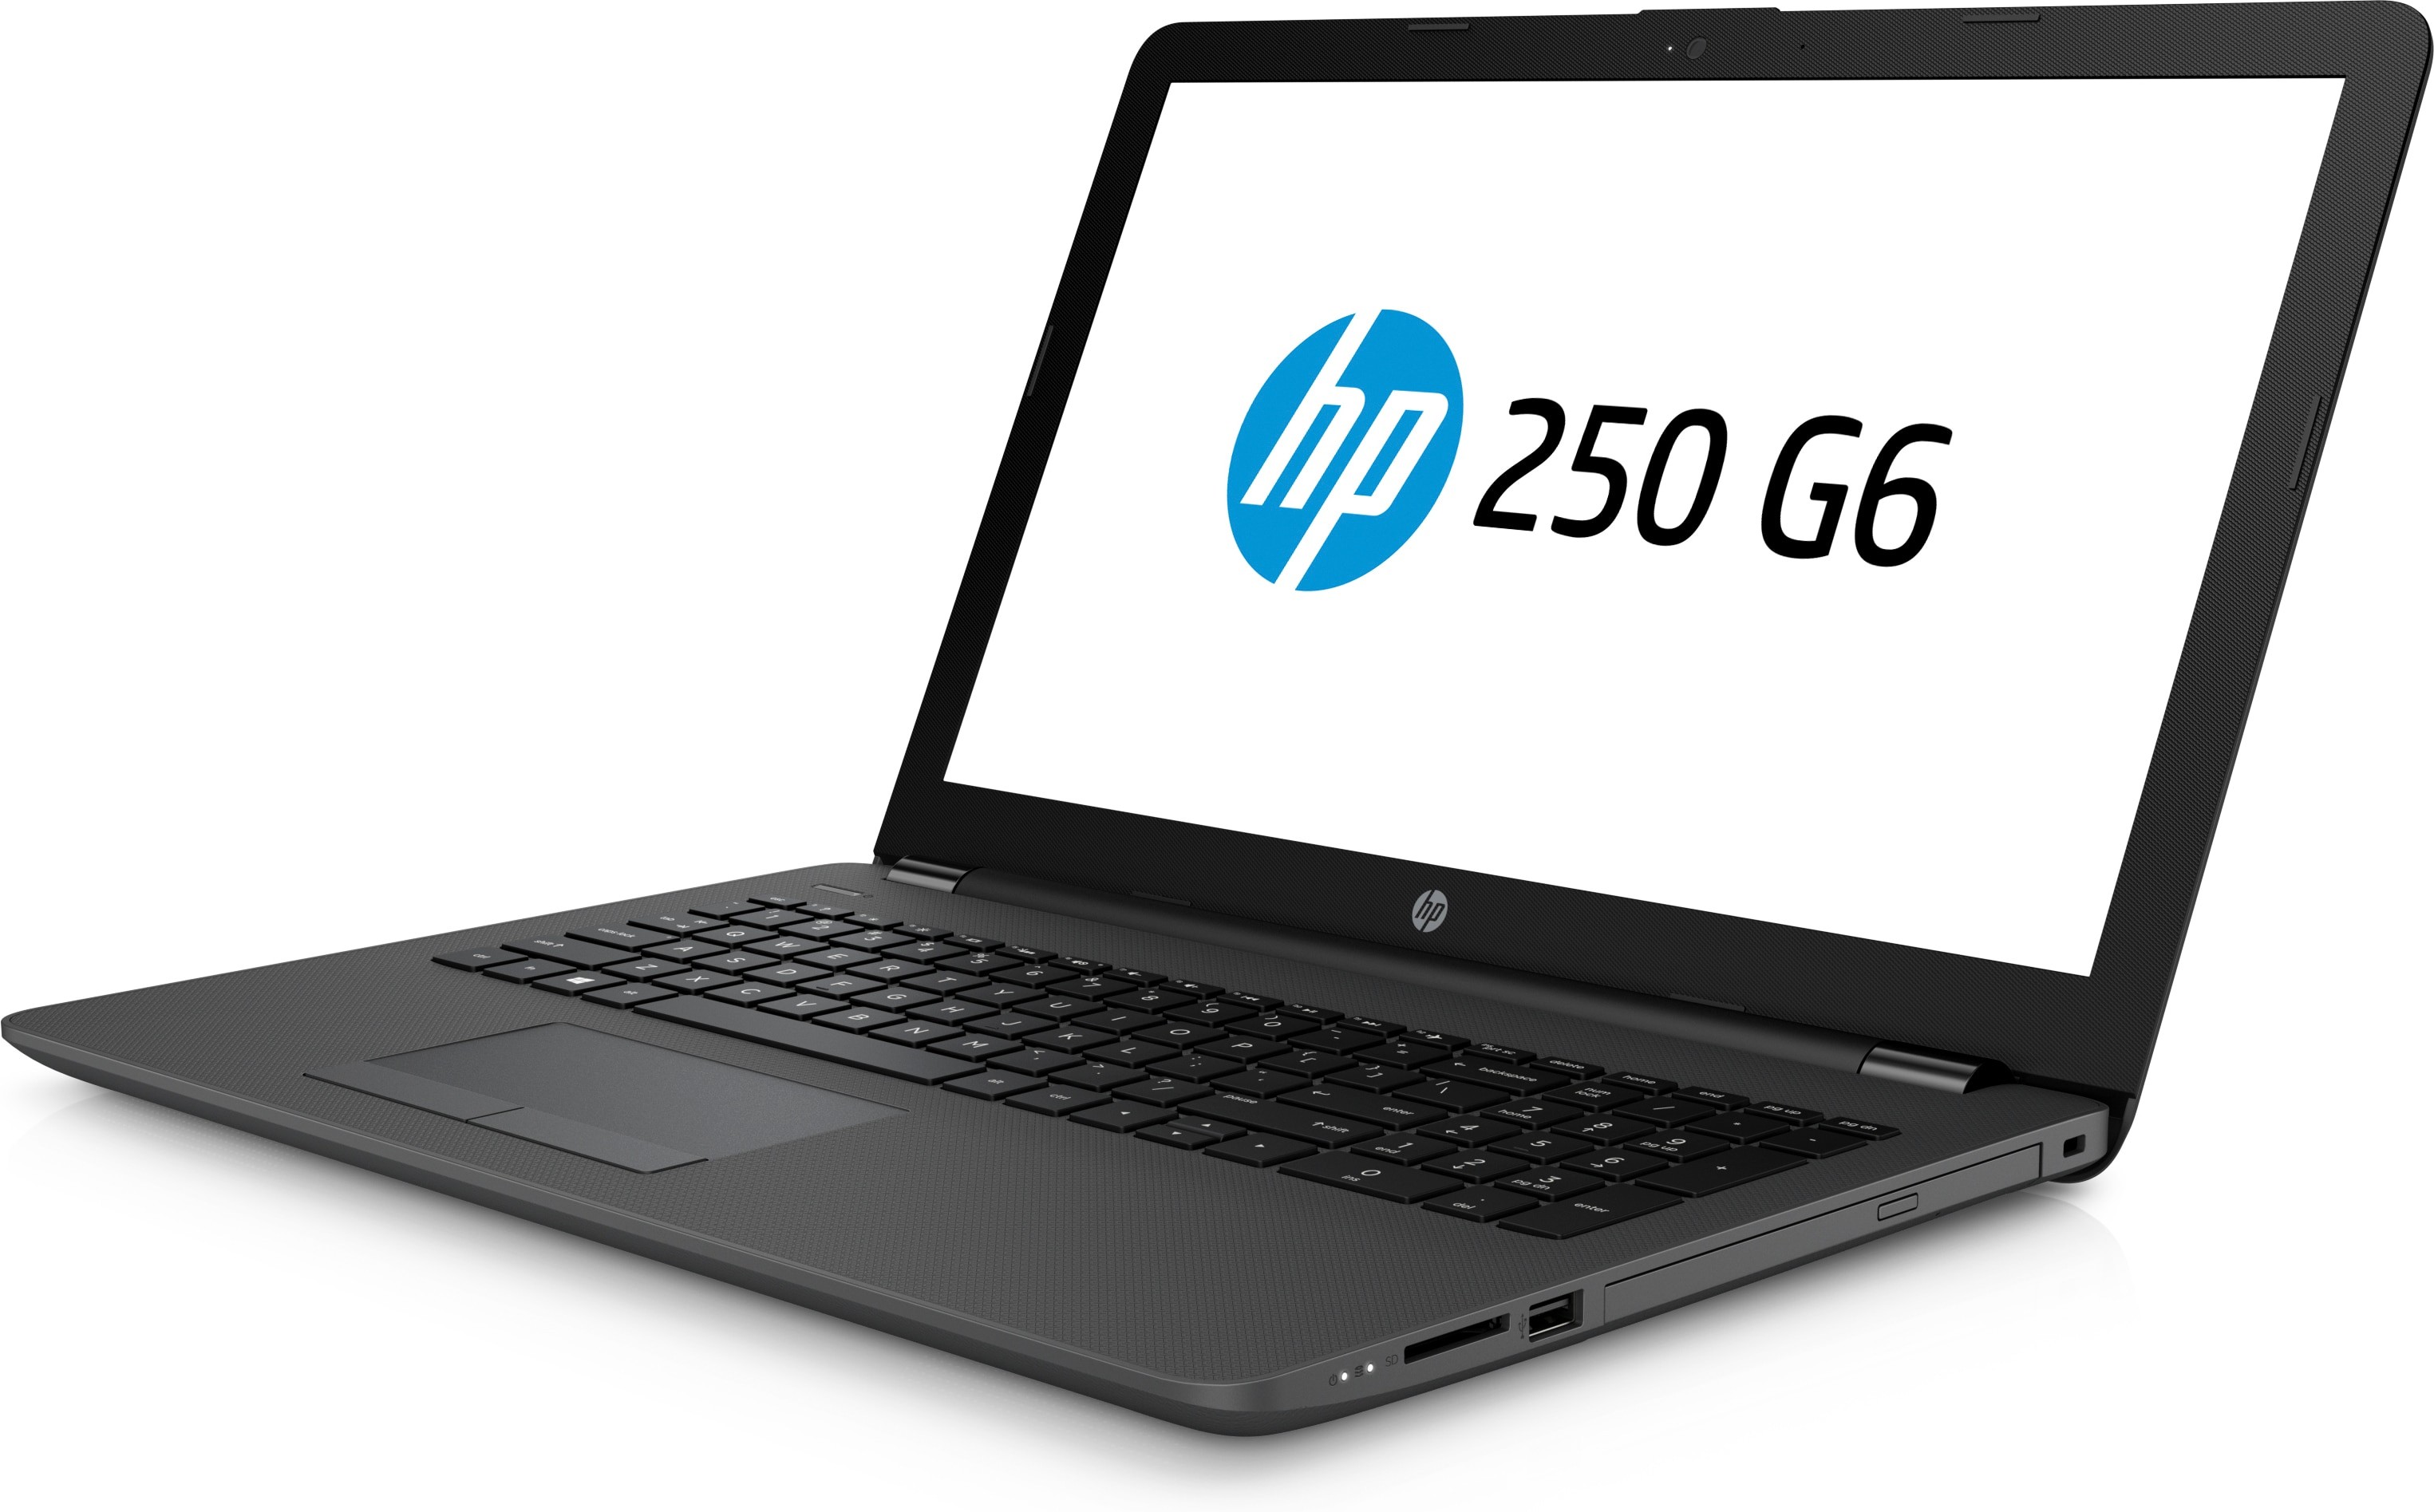 HP 250 G6 i5-7200U 4GB 500GB Rad520 FreeDOS 15.6 Reacondicionado